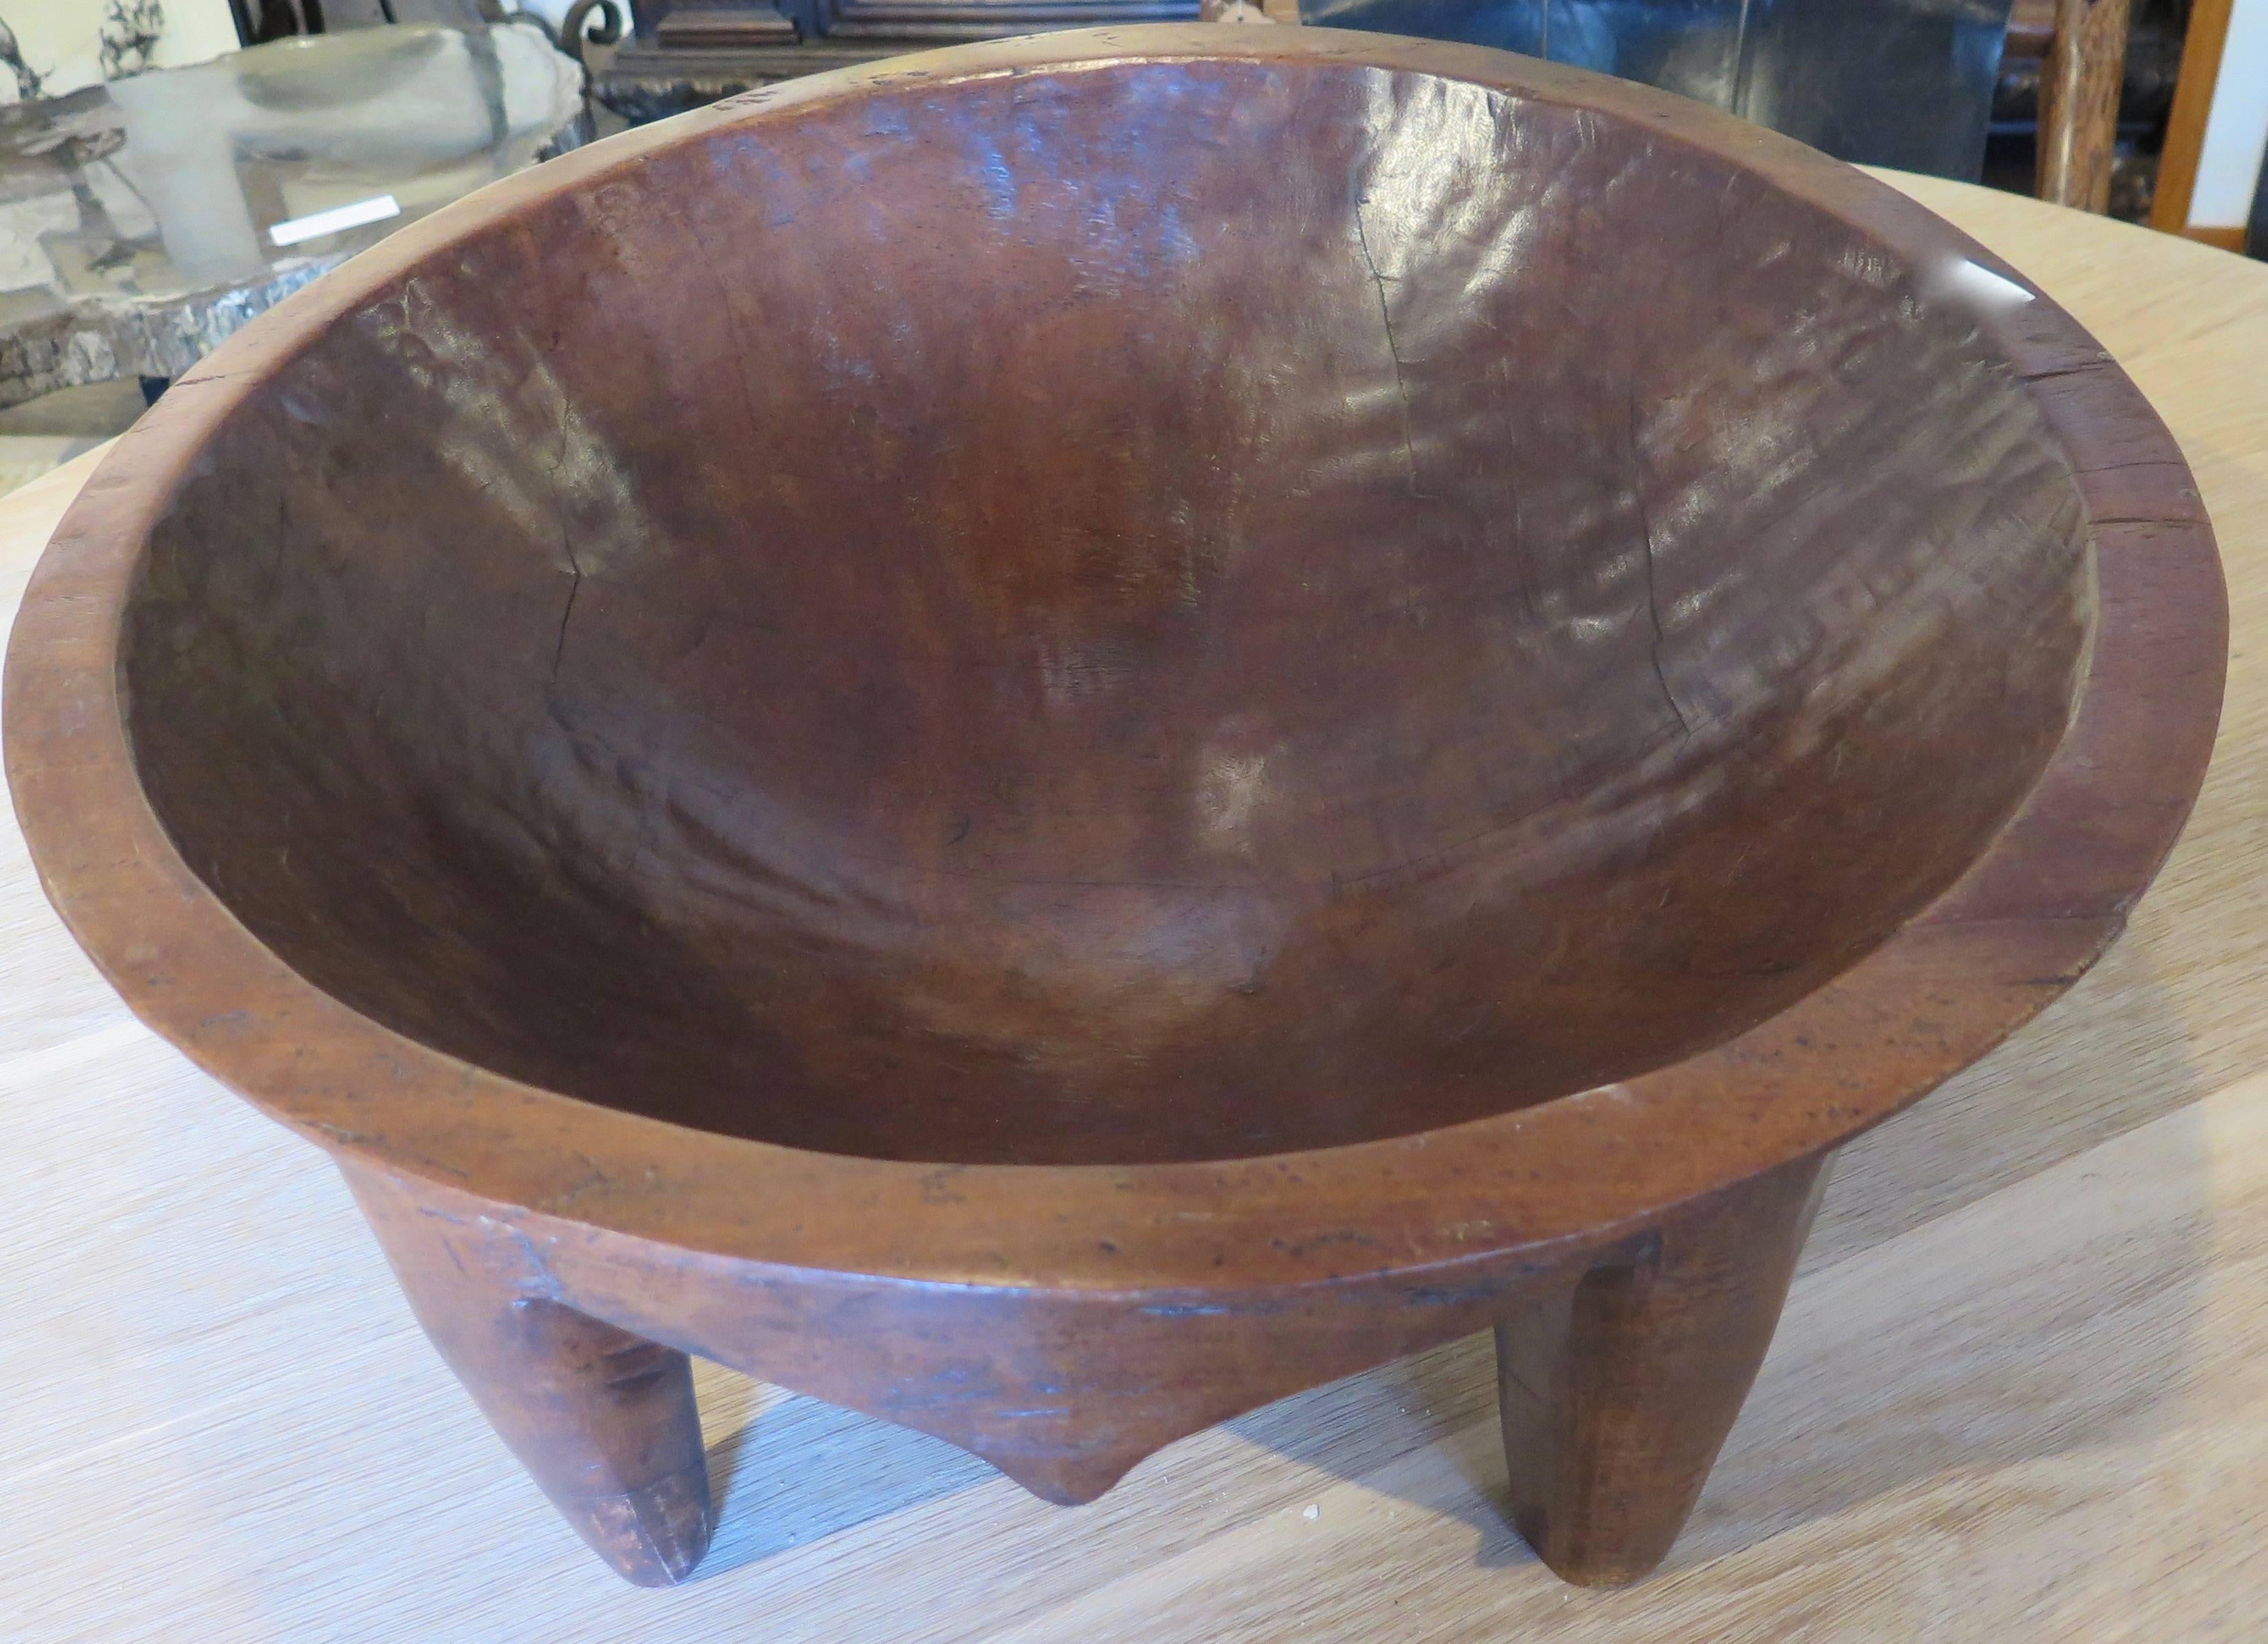 kava bowl for sale